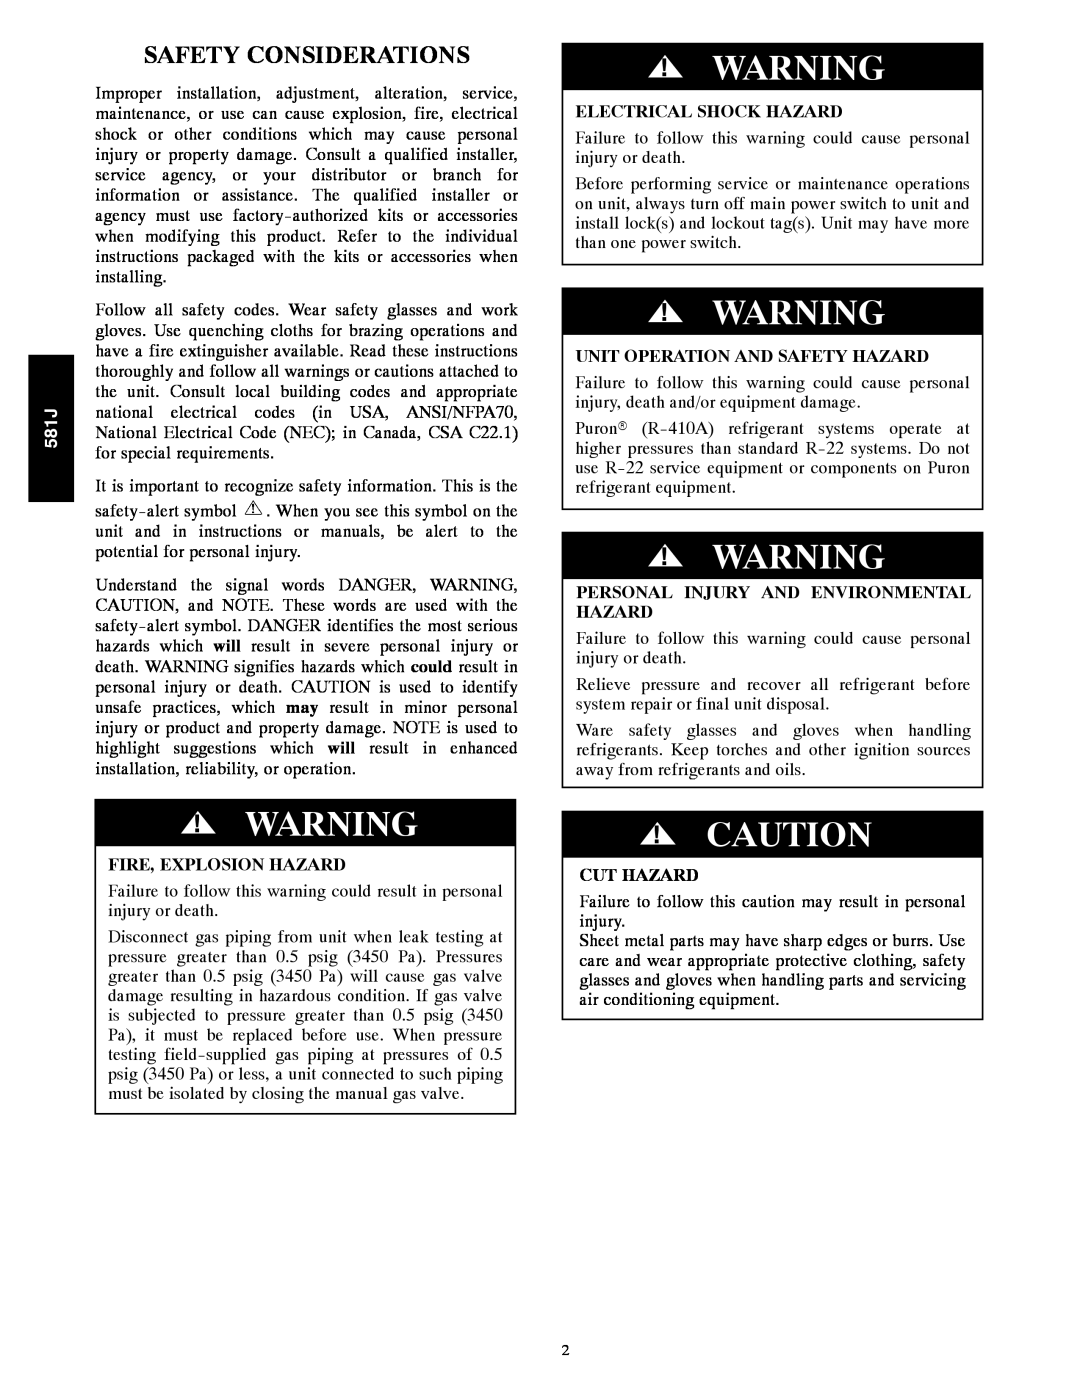 Bryant 581J Safety Considerations, Fire, Explosion Hazard, Electrical Shock Hazard, Unit Operation And Safety Hazard 